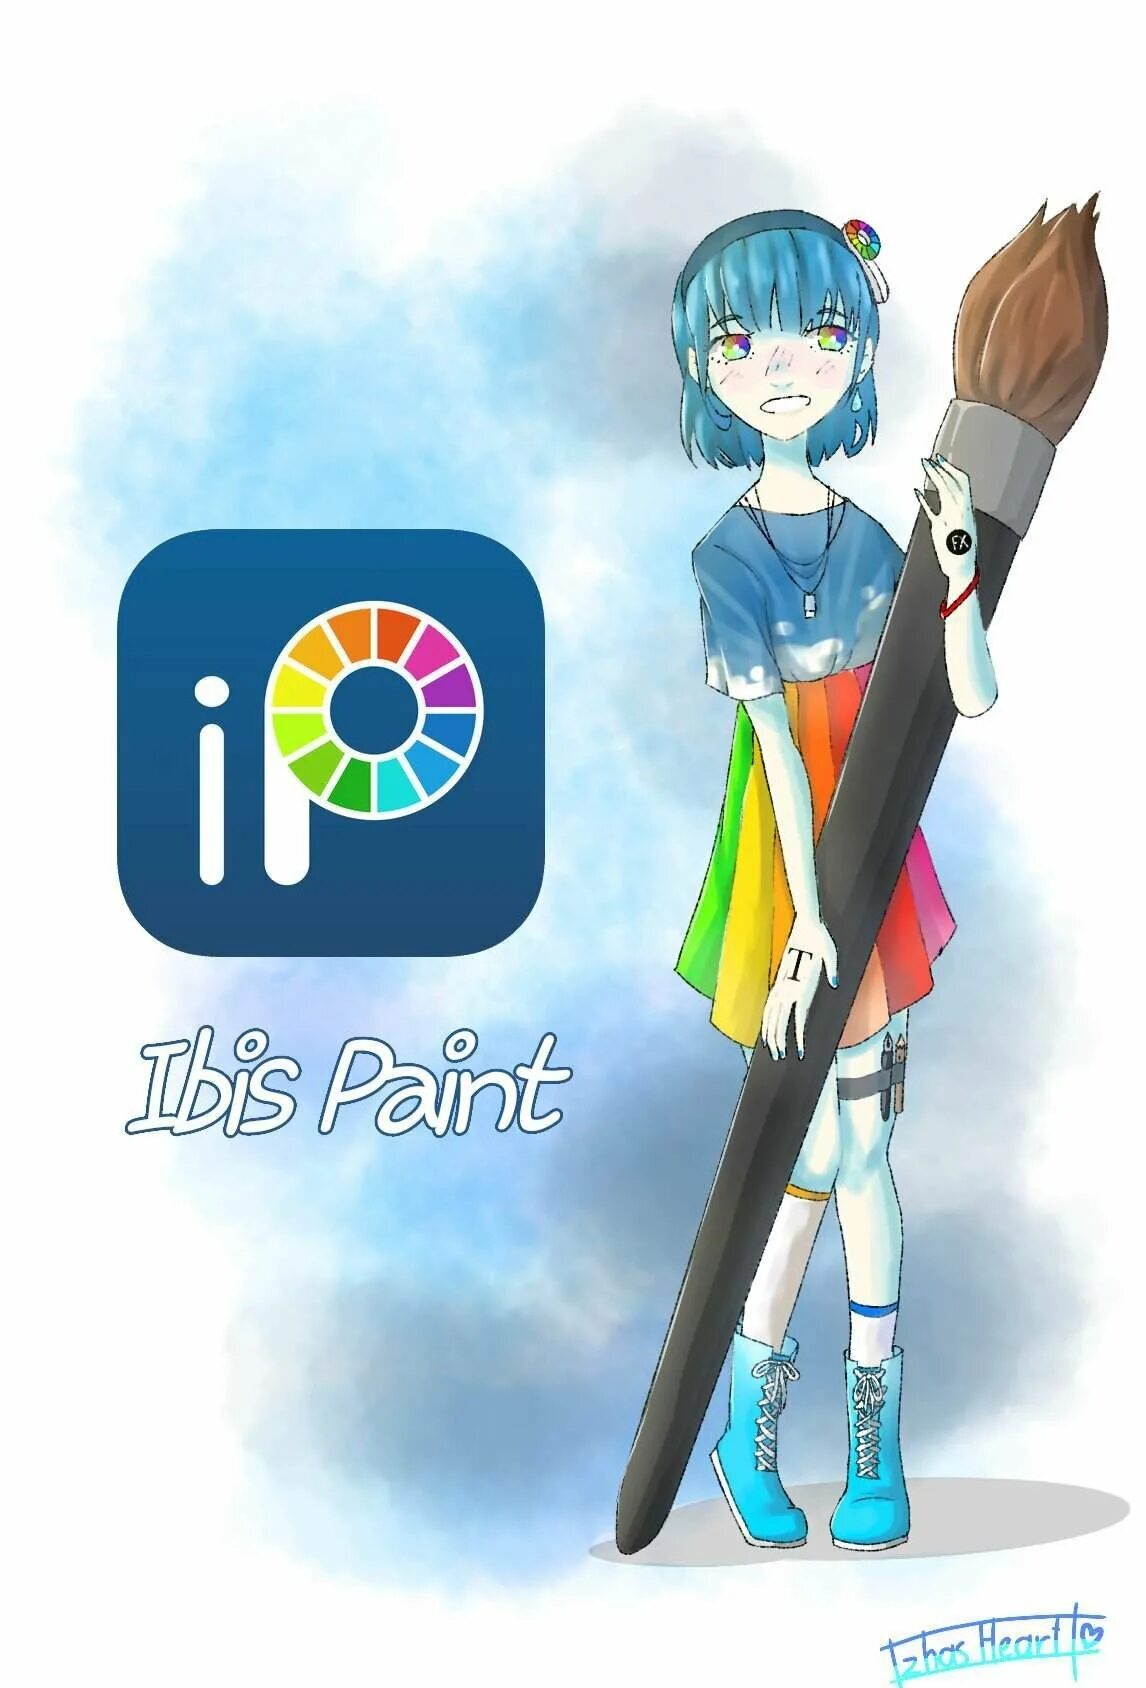 Ibis paint x premium. Аниме приложение. Значки приложений в стиле аниме. Заставки на приложения с аниме. Иконки для приложений в стиле аниме персонажей.